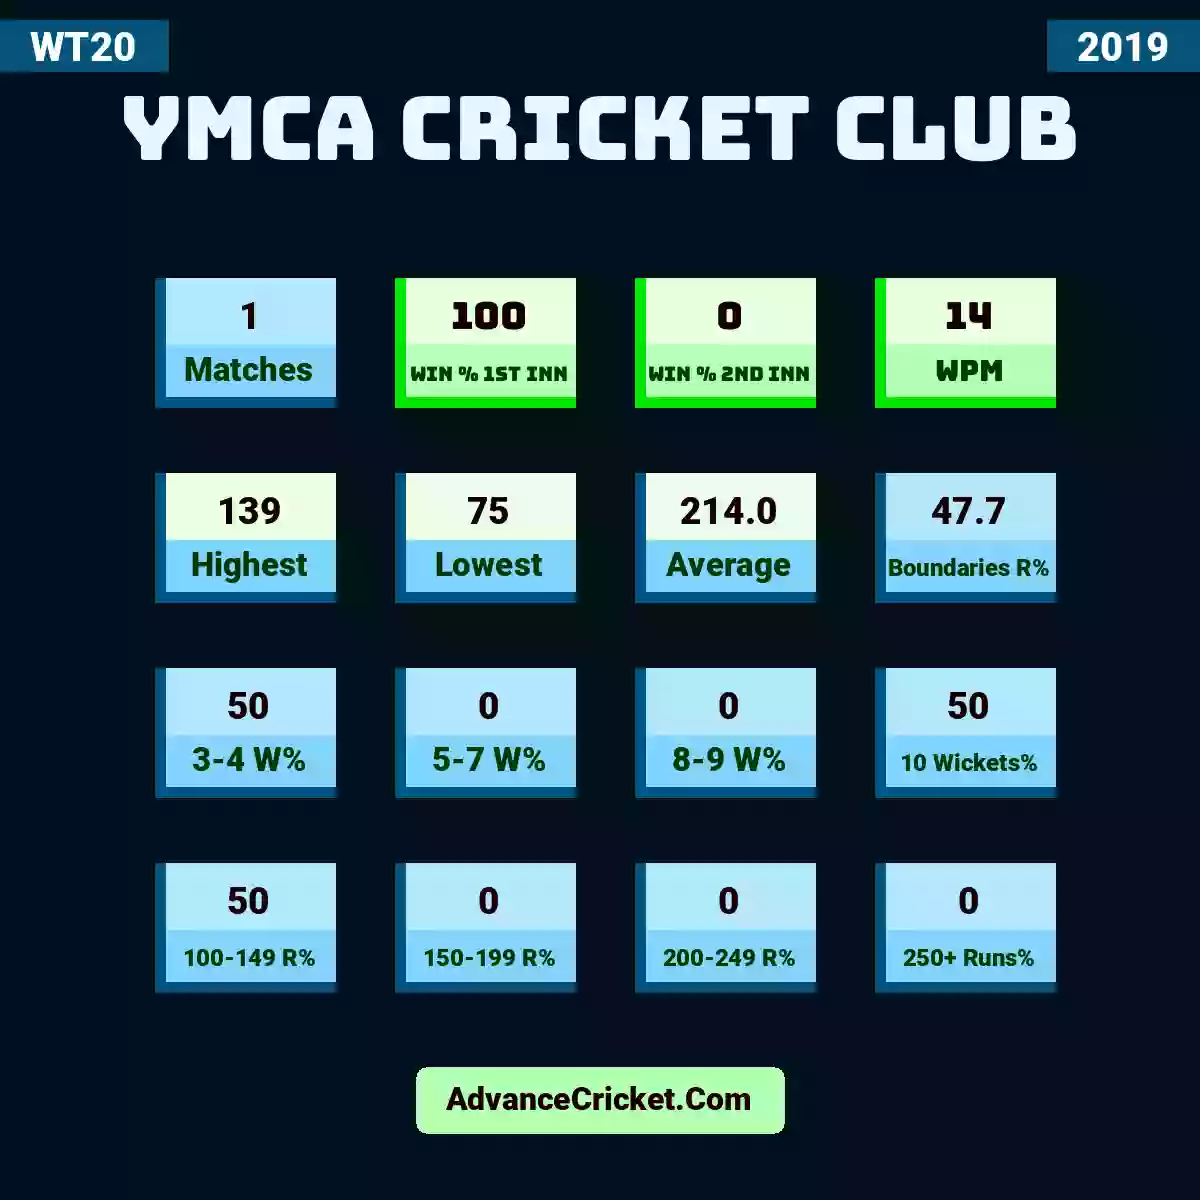 Image showing YMCA Cricket Club with Matches: 1, Win % 1st Inn: 100, Win % 2nd Inn: 0, WPM: 14, Highest: 139, Lowest: 75, Average: 214.0, Boundaries R%: 47.7, 3-4 W%: 50, 5-7 W%: 0, 8-9 W%: 0, 10 Wickets%: 50, 100-149 R%: 50, 150-199 R%: 0, 200-249 R%: 0, 250+ Runs%: 0.